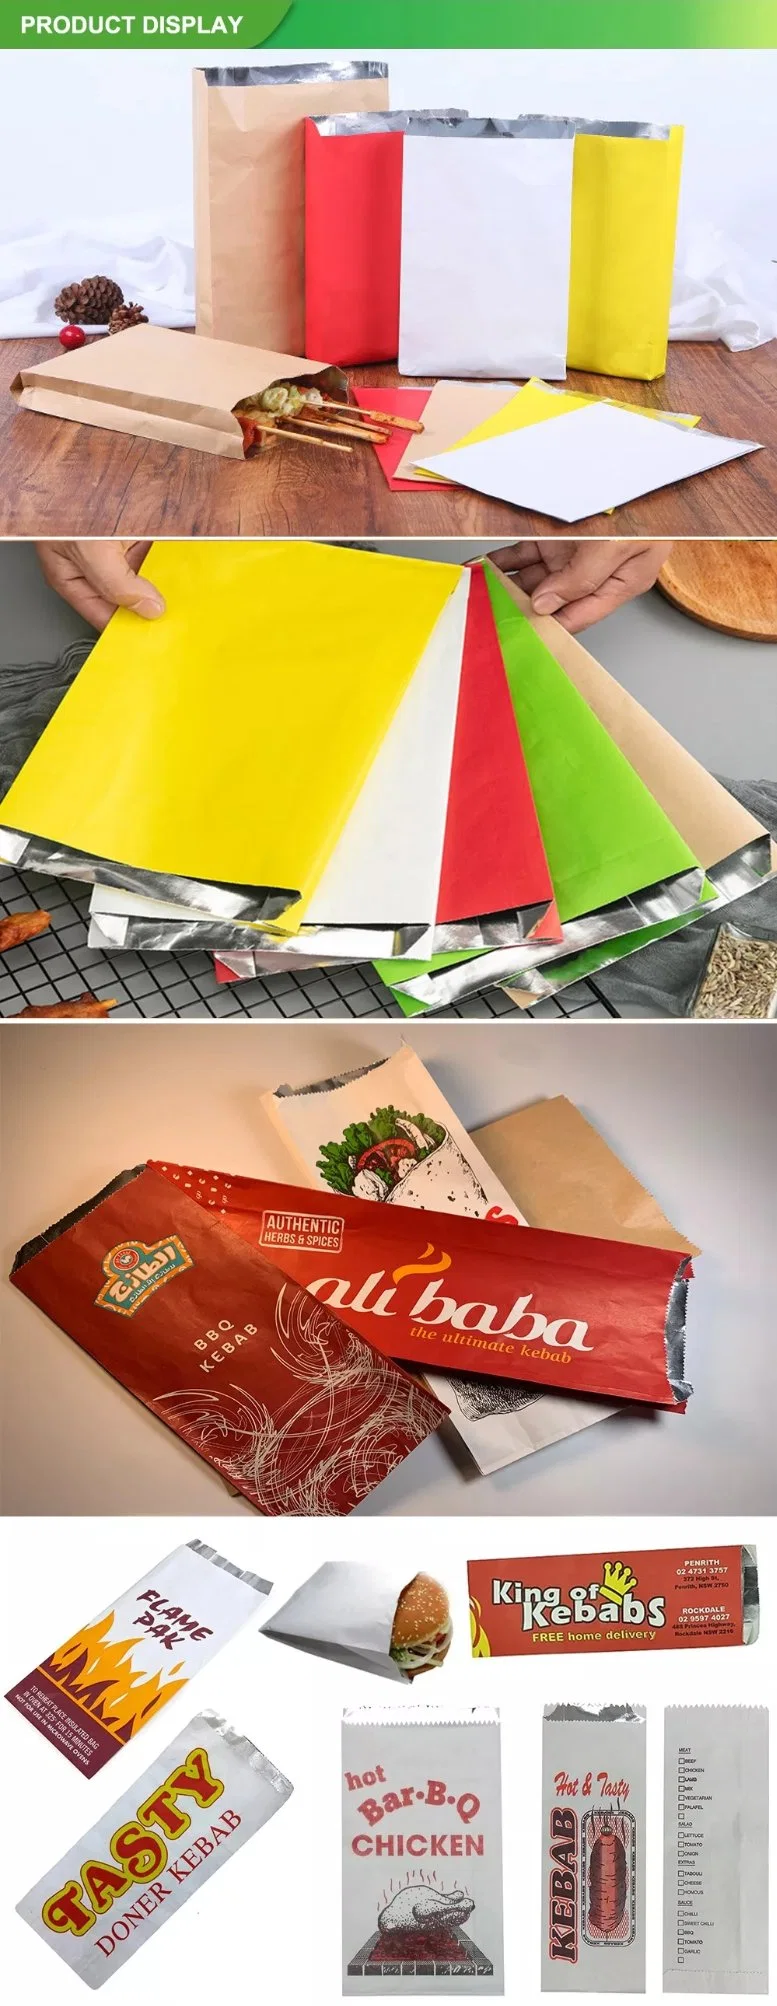 Toast Bread Aluminum Foil Laminated Paper Kebab Foils in Oven Bag